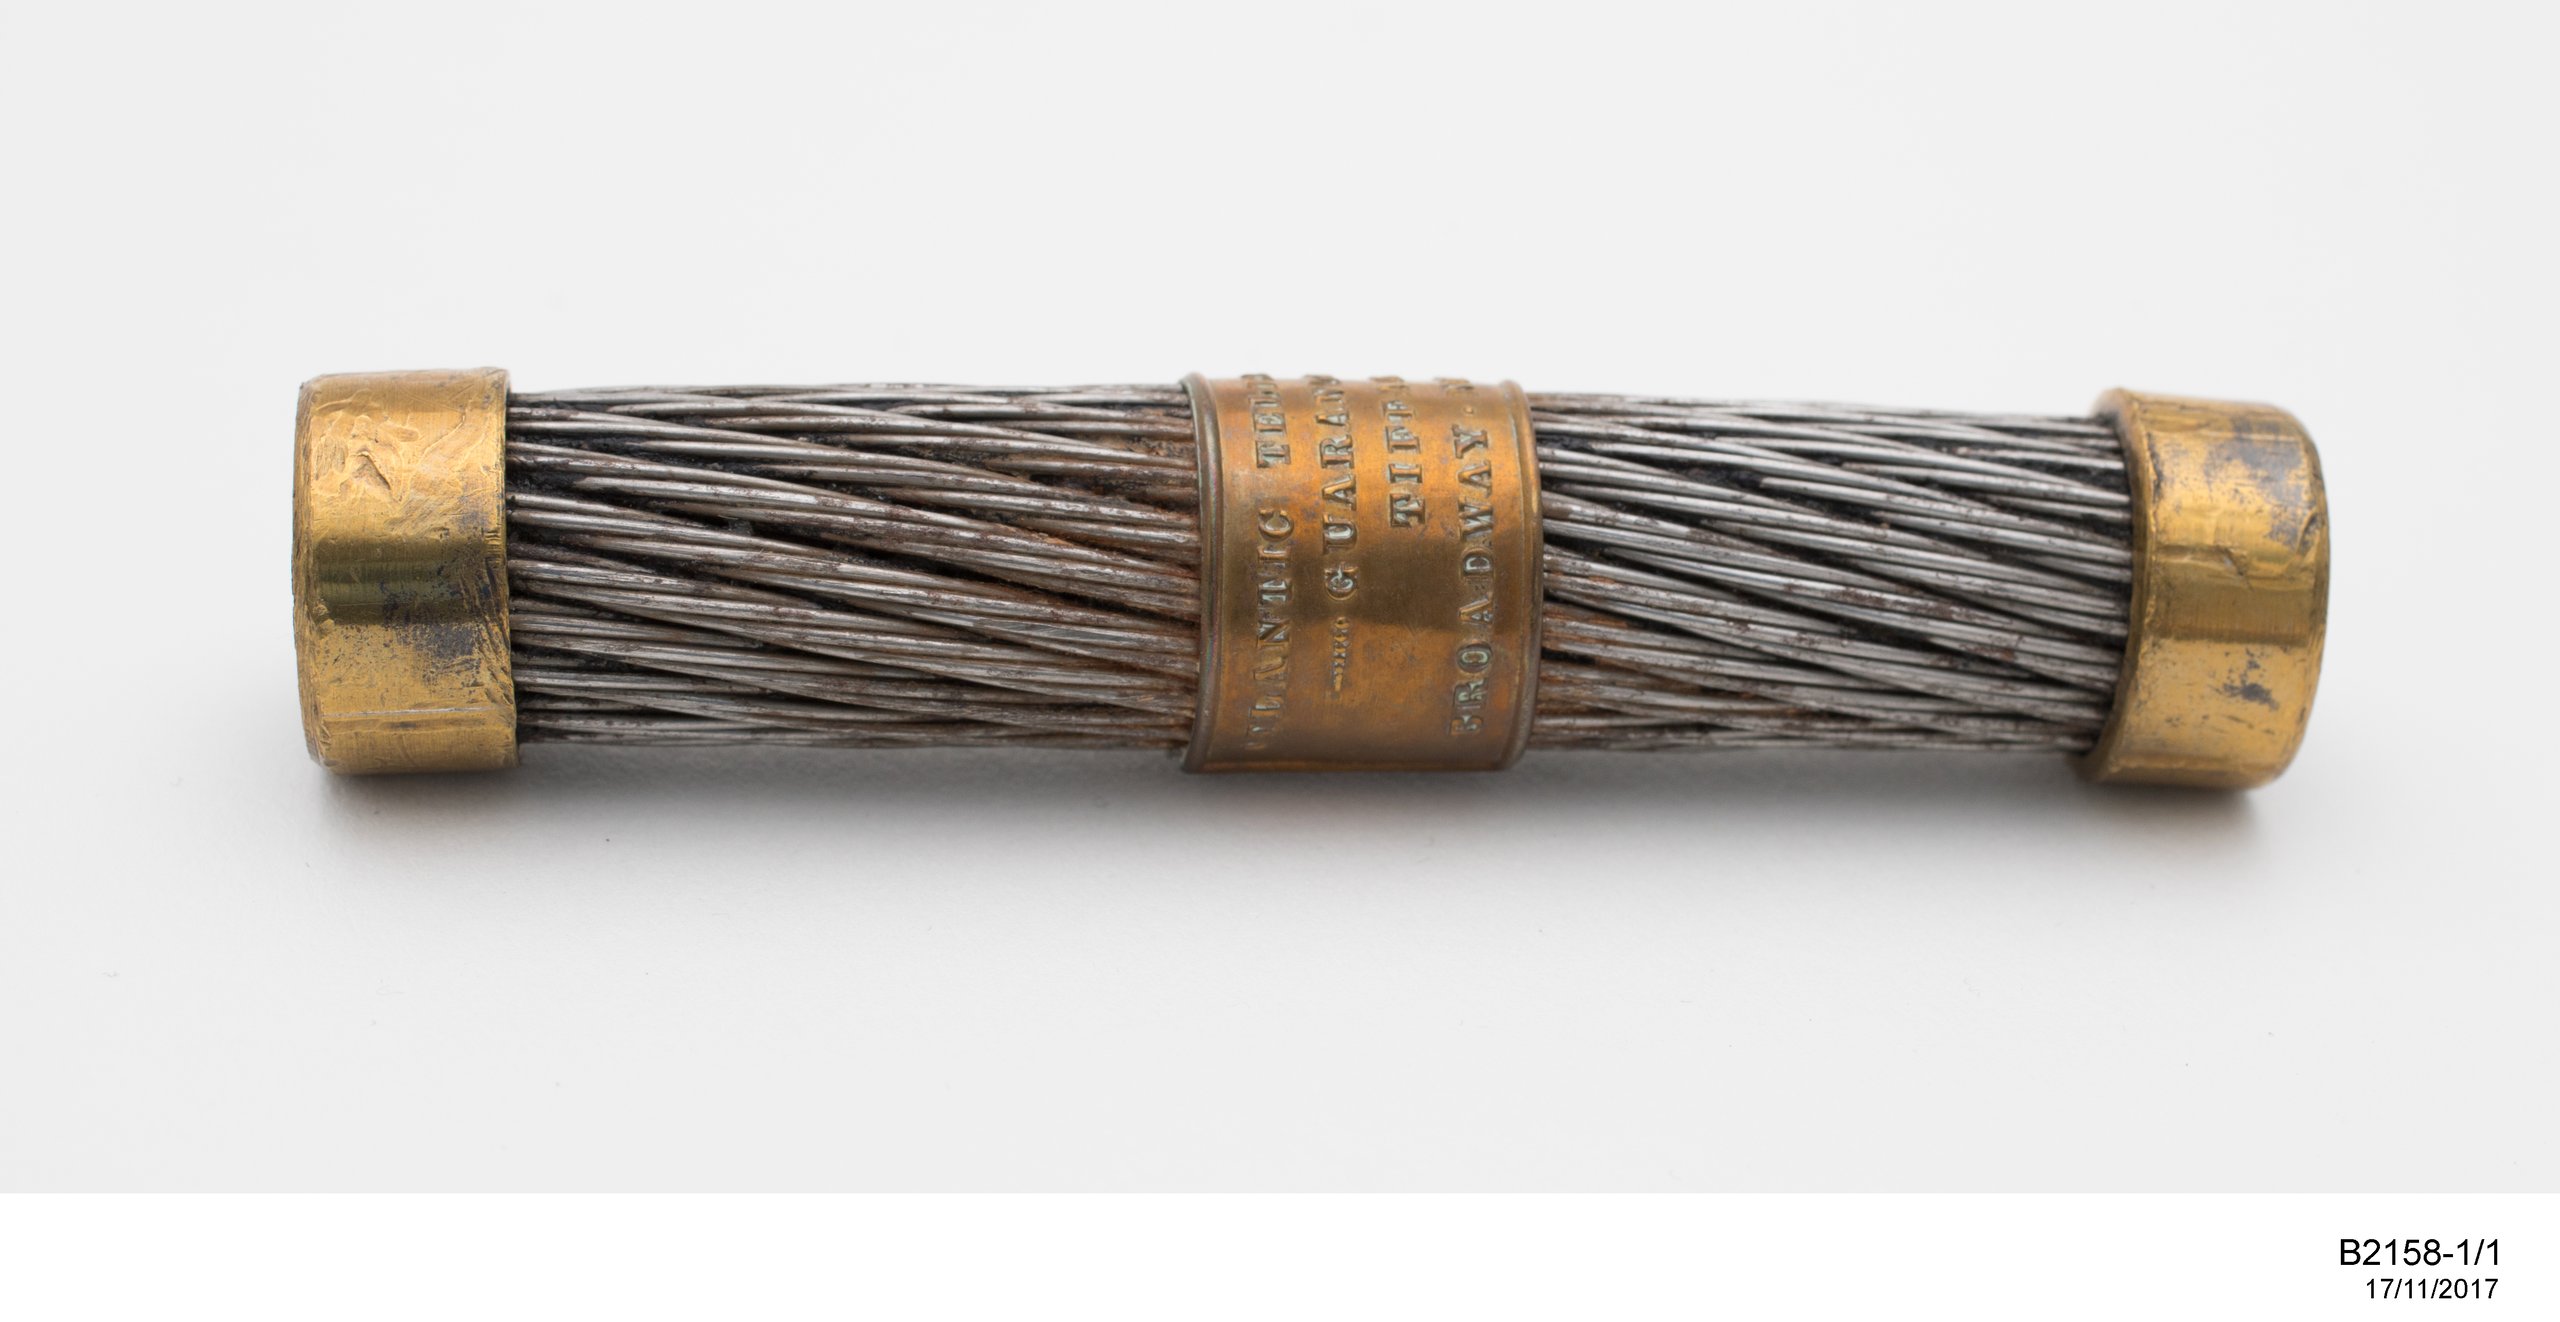 Section of Transatlantic telegraph cable